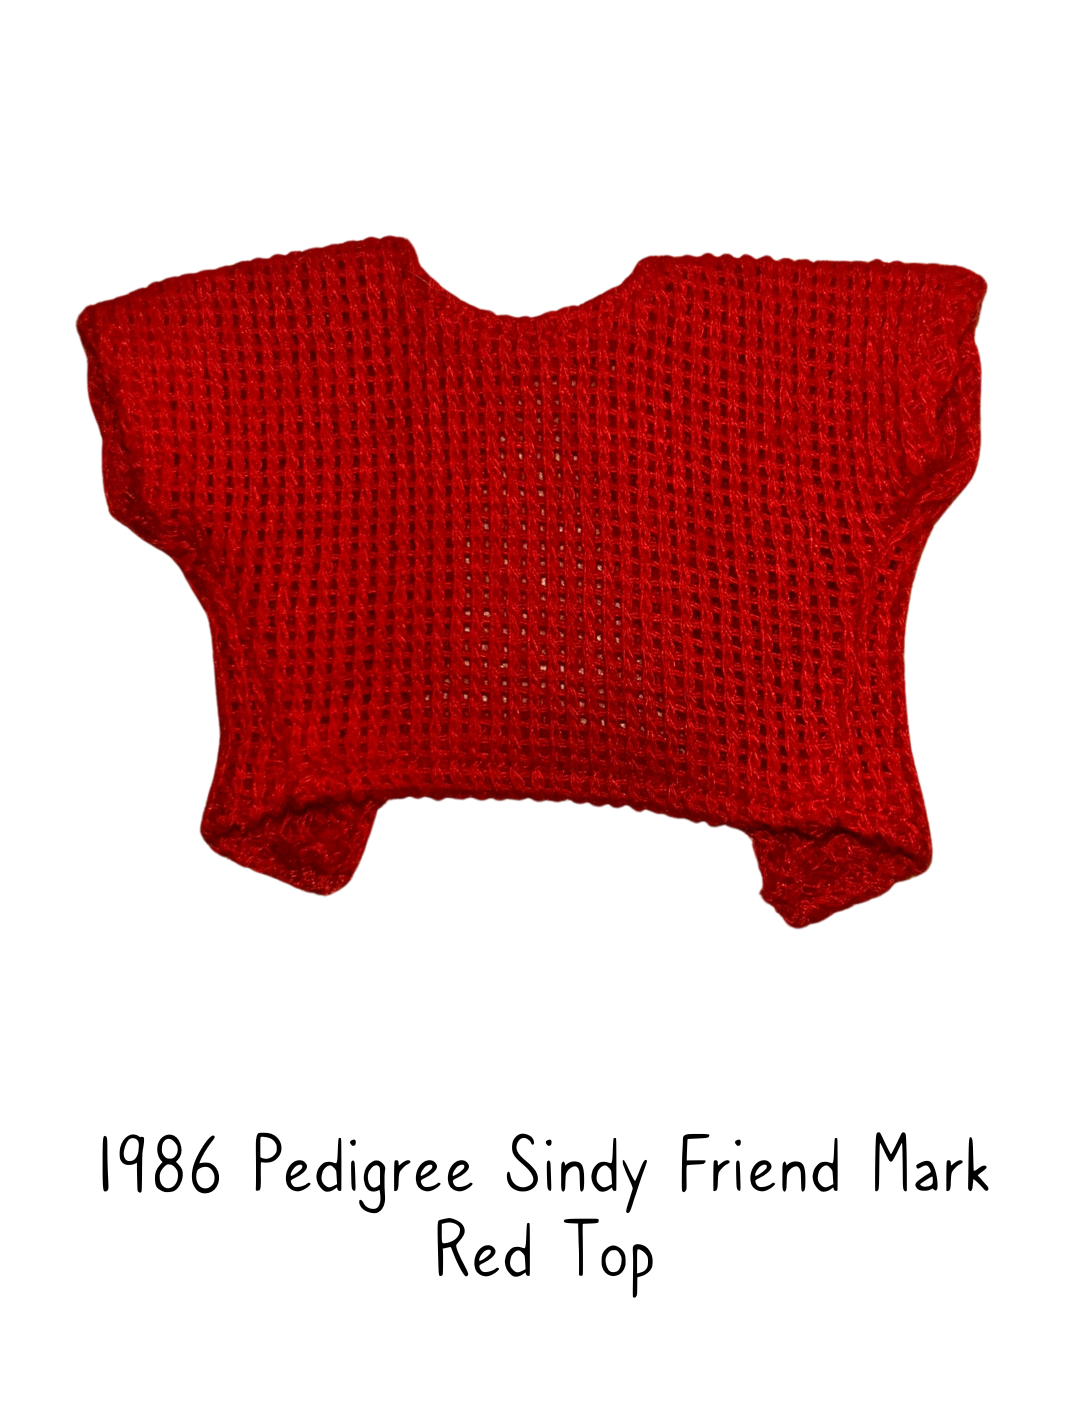 1986 Pedigree Mark Fashion Doll Red Top